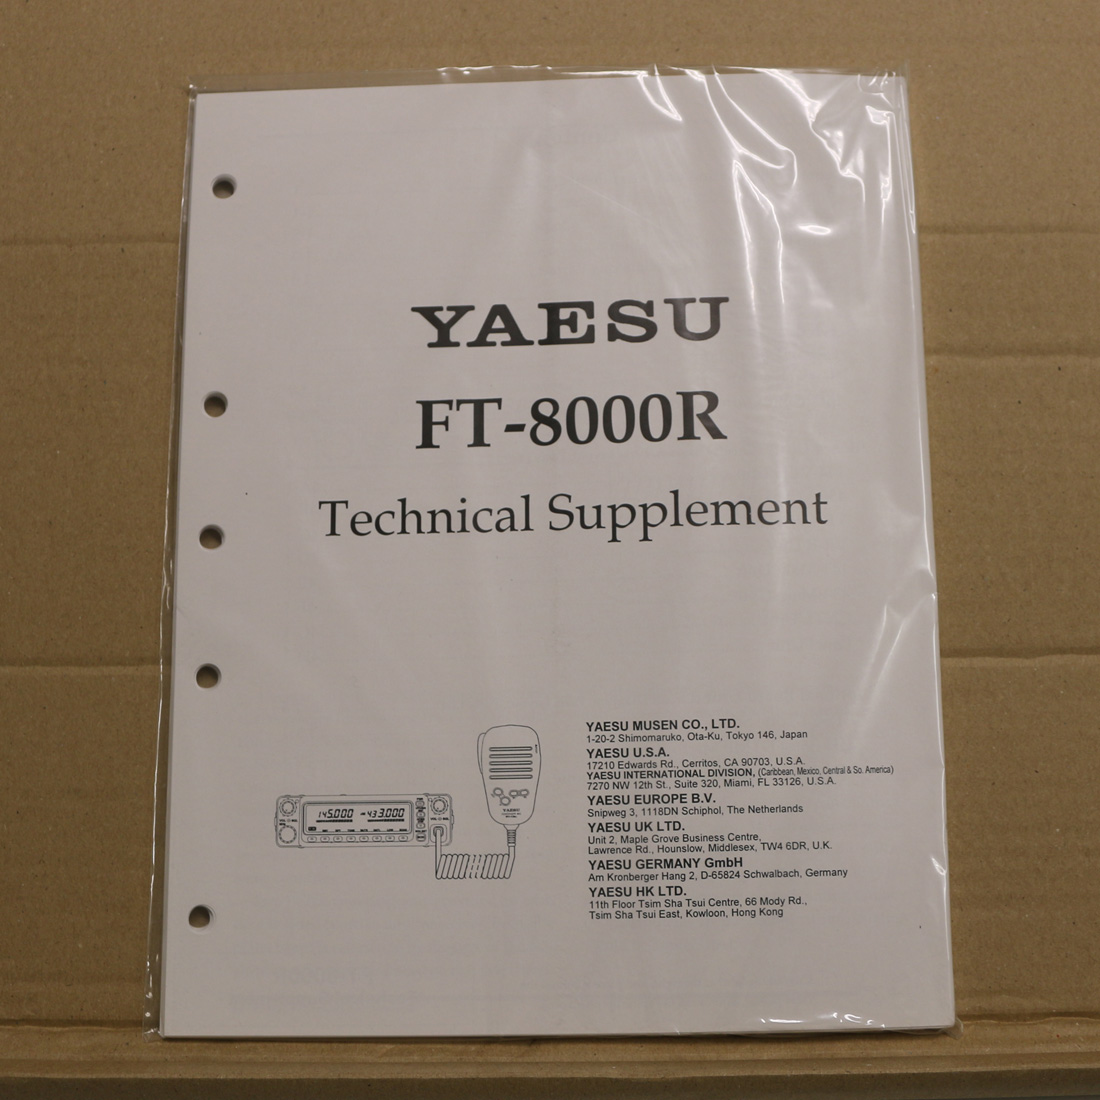 Yaesu FT-8000R Technical Supplement